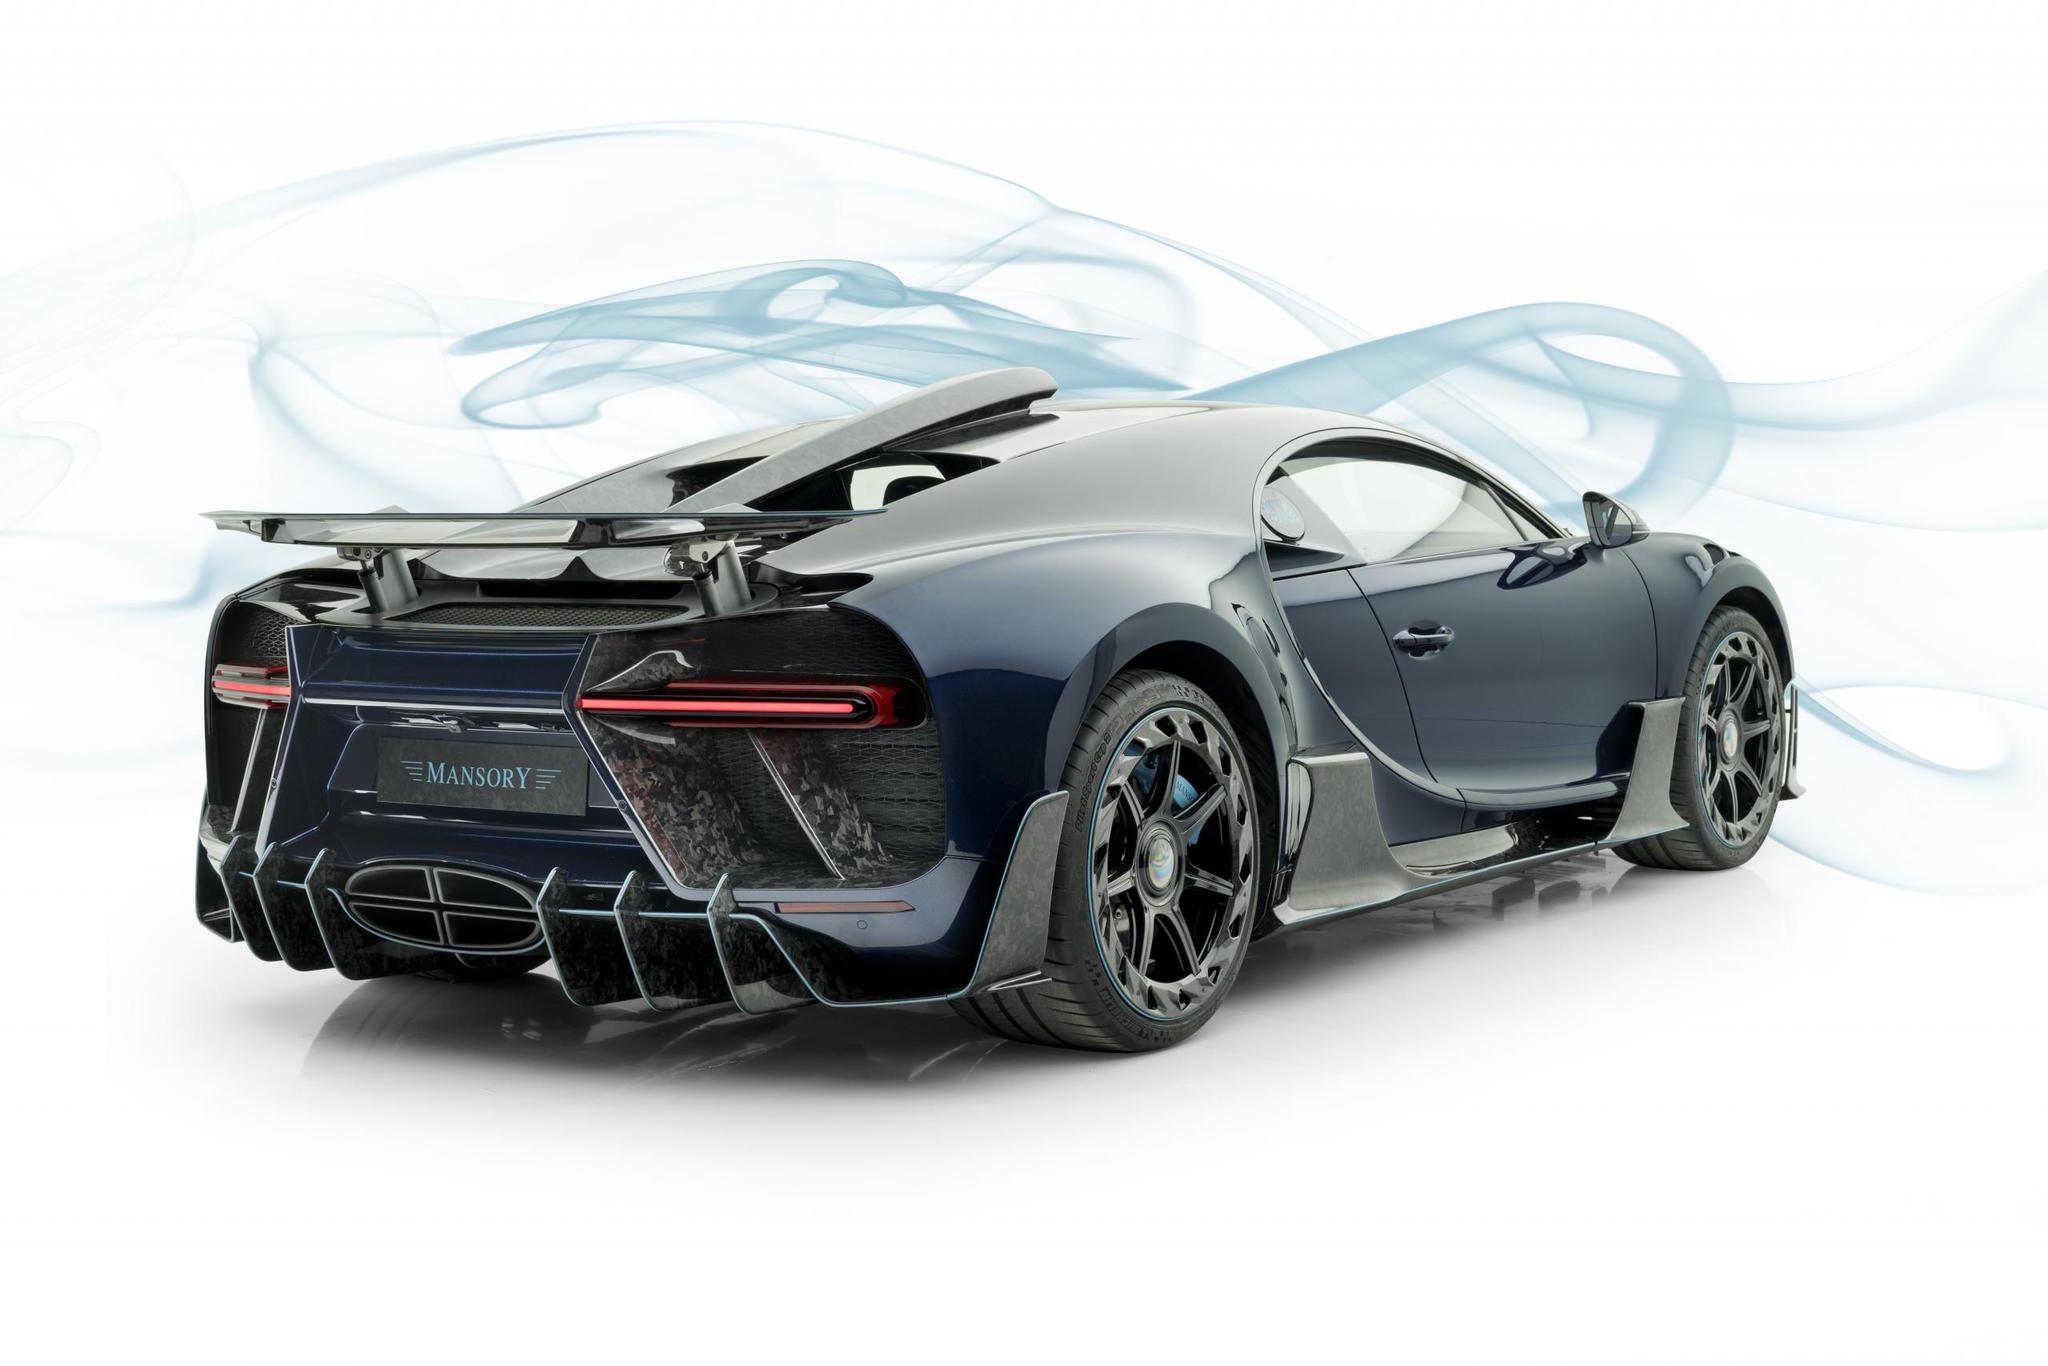 Mansory body kit for Bugatti Chiron carbon